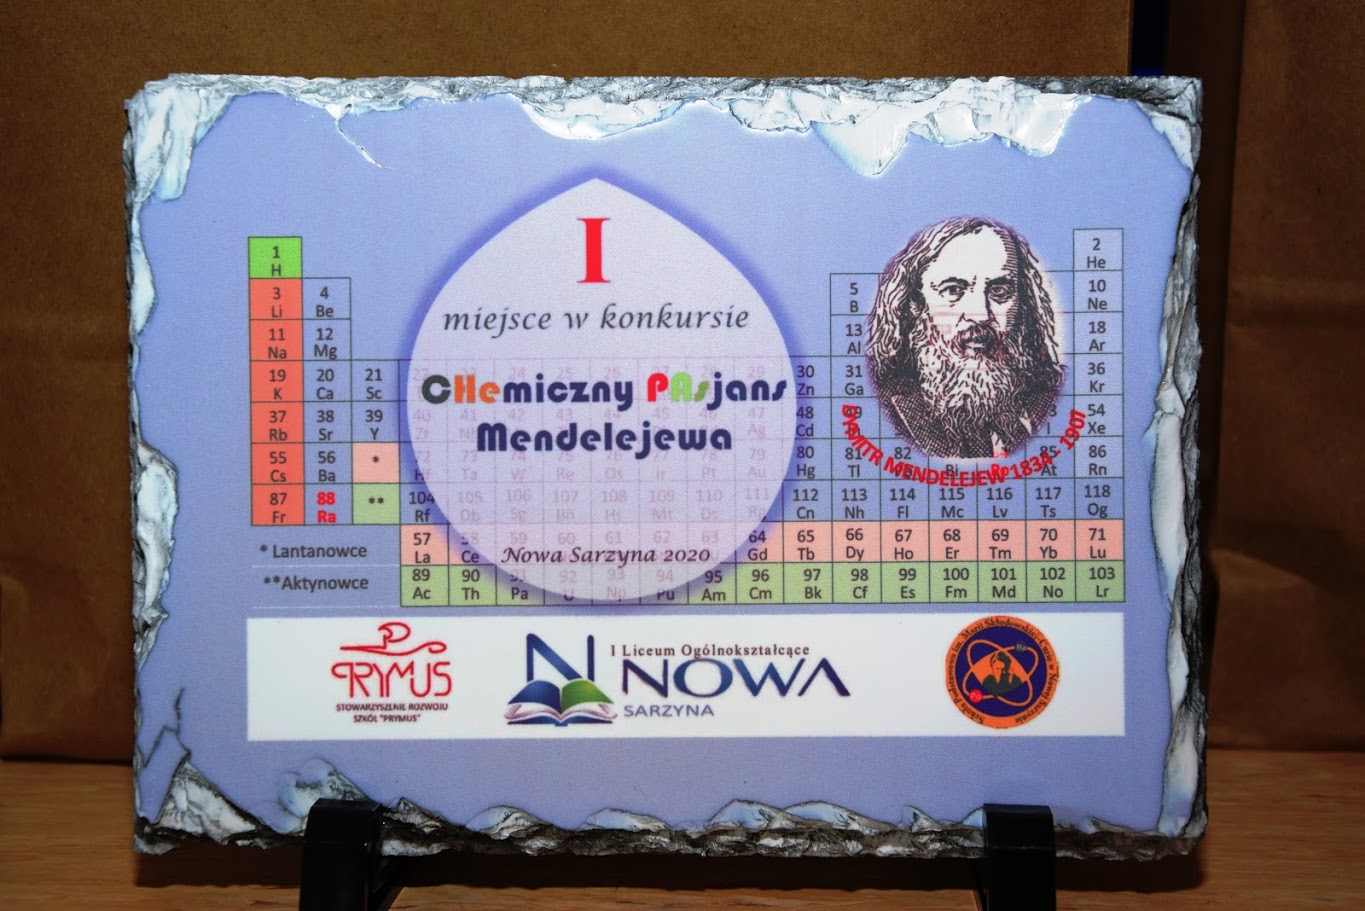 Chemiczny pasjans Mendelejewa